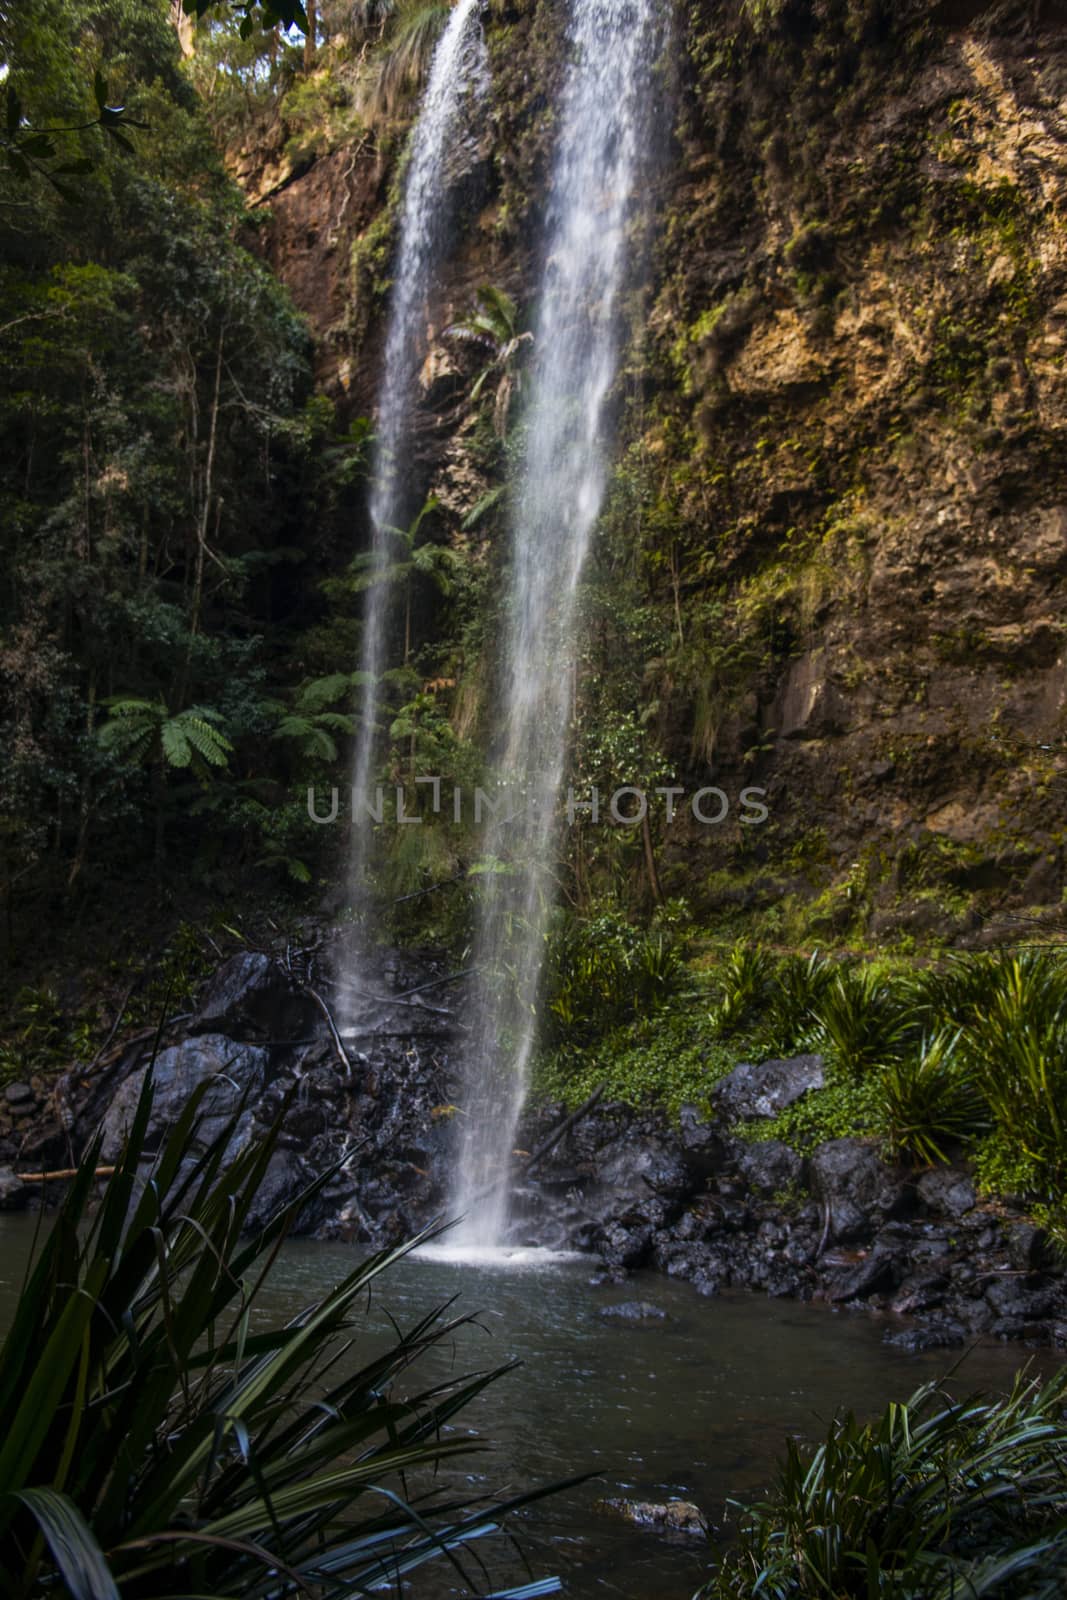 Naturally beautiful Twin Falls at Springbrook in Queensland.